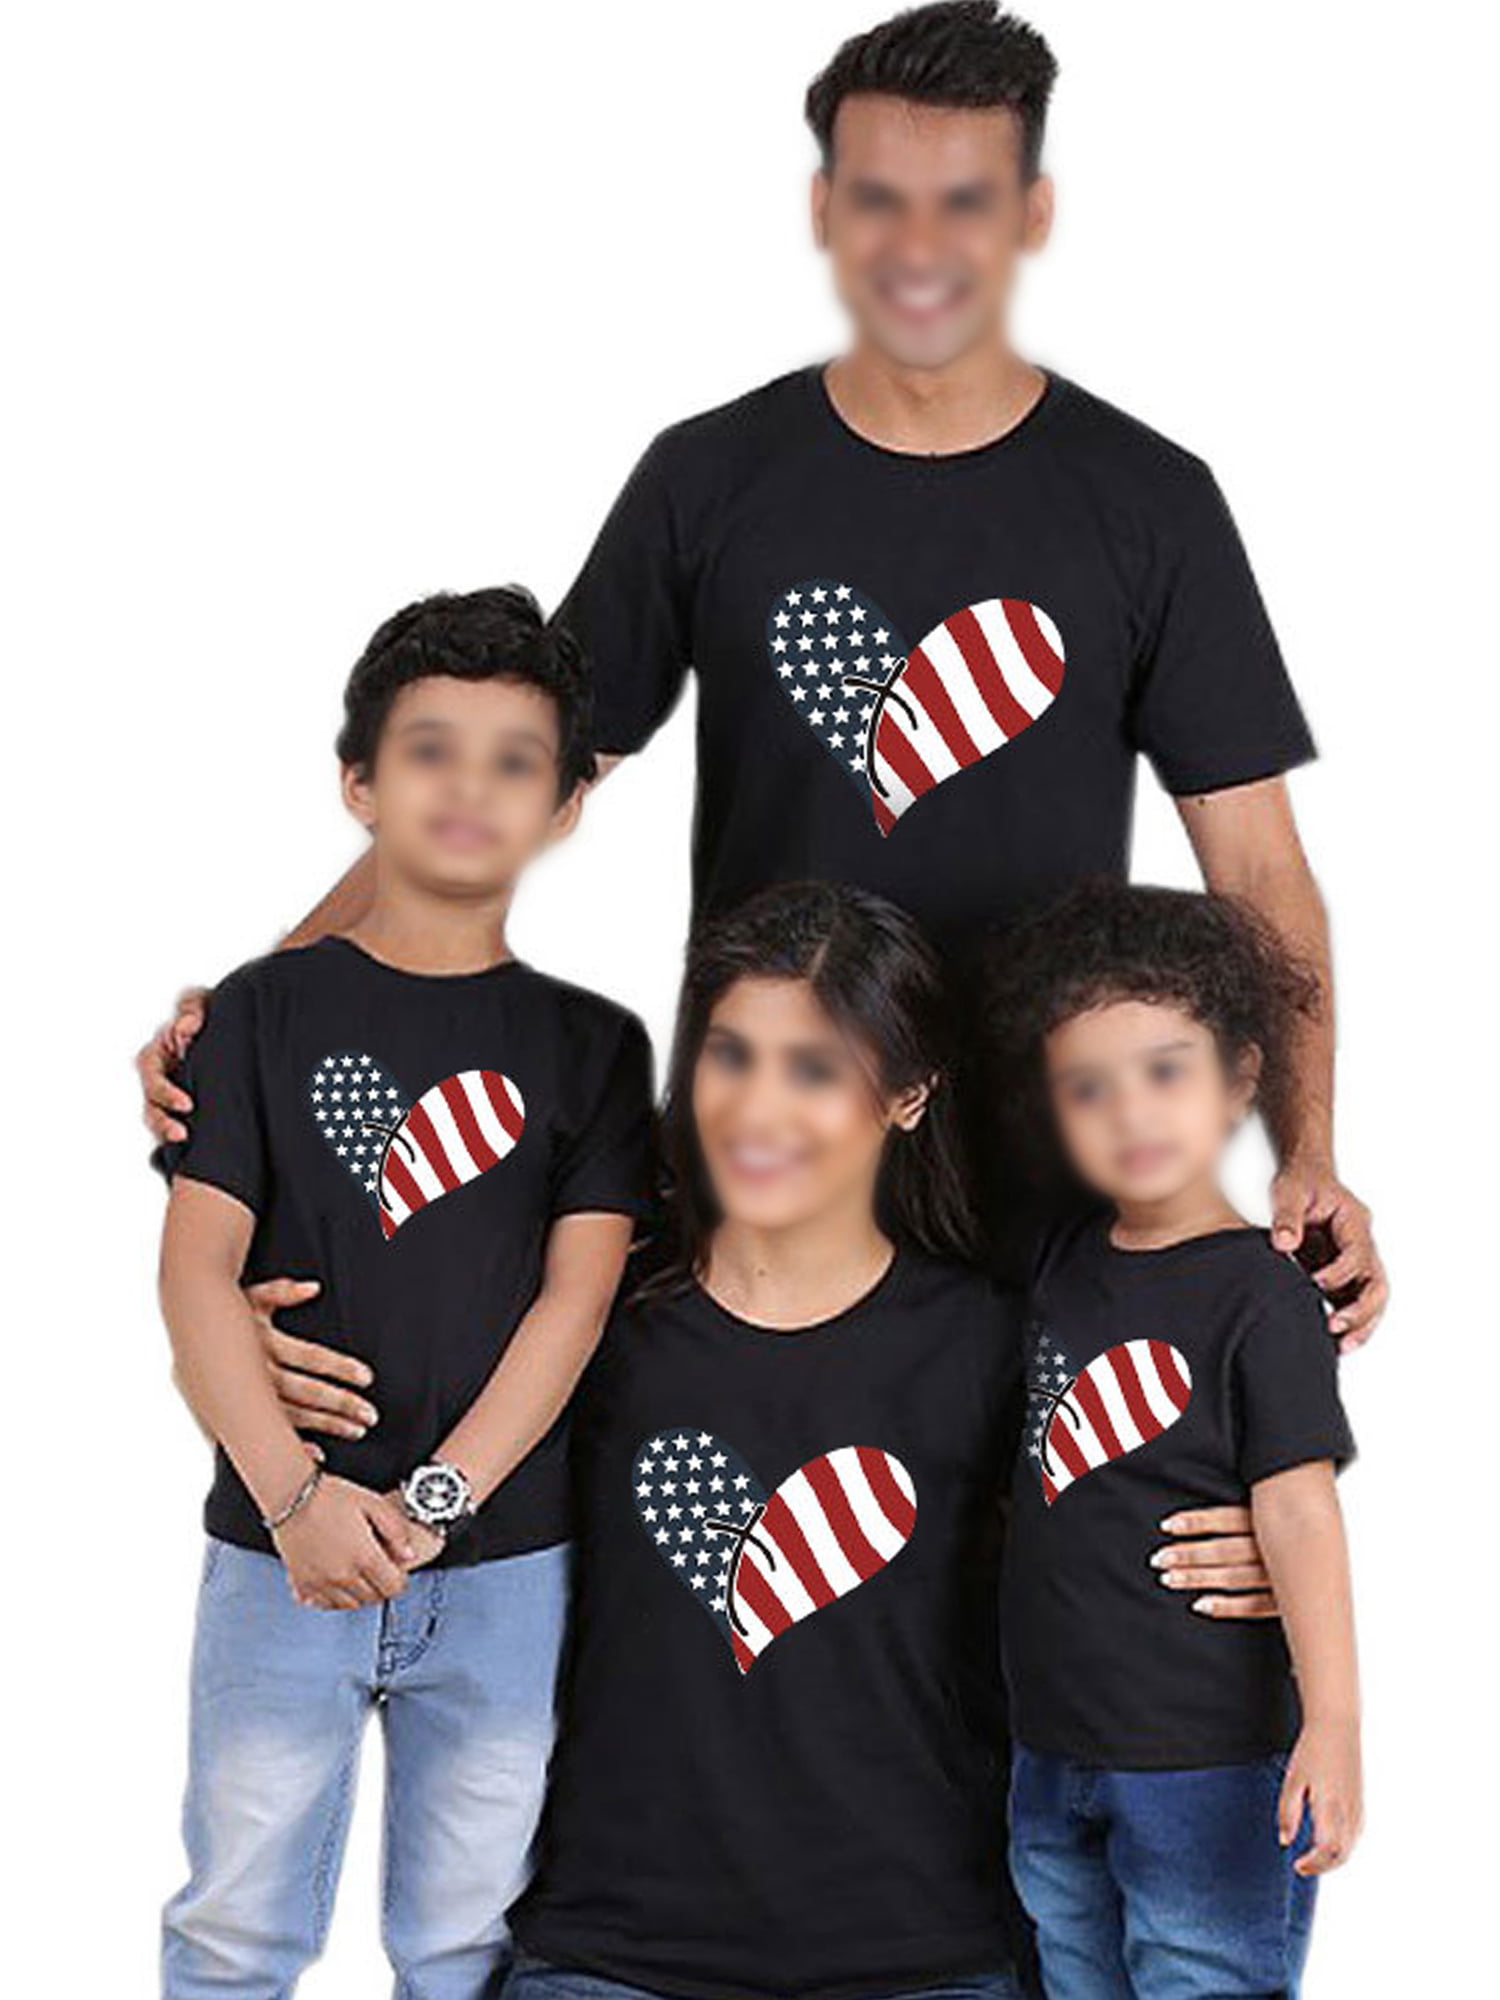 Grianlook Men Women Parent-Child Tops American Flag Printed Tee Shirt Short Sleeve Family Matching T-Shirt Dad Mom Kid Lounge T Shirts Comfy Crew Neck Tunic Blouse Black Kids 110cm Walmart.com